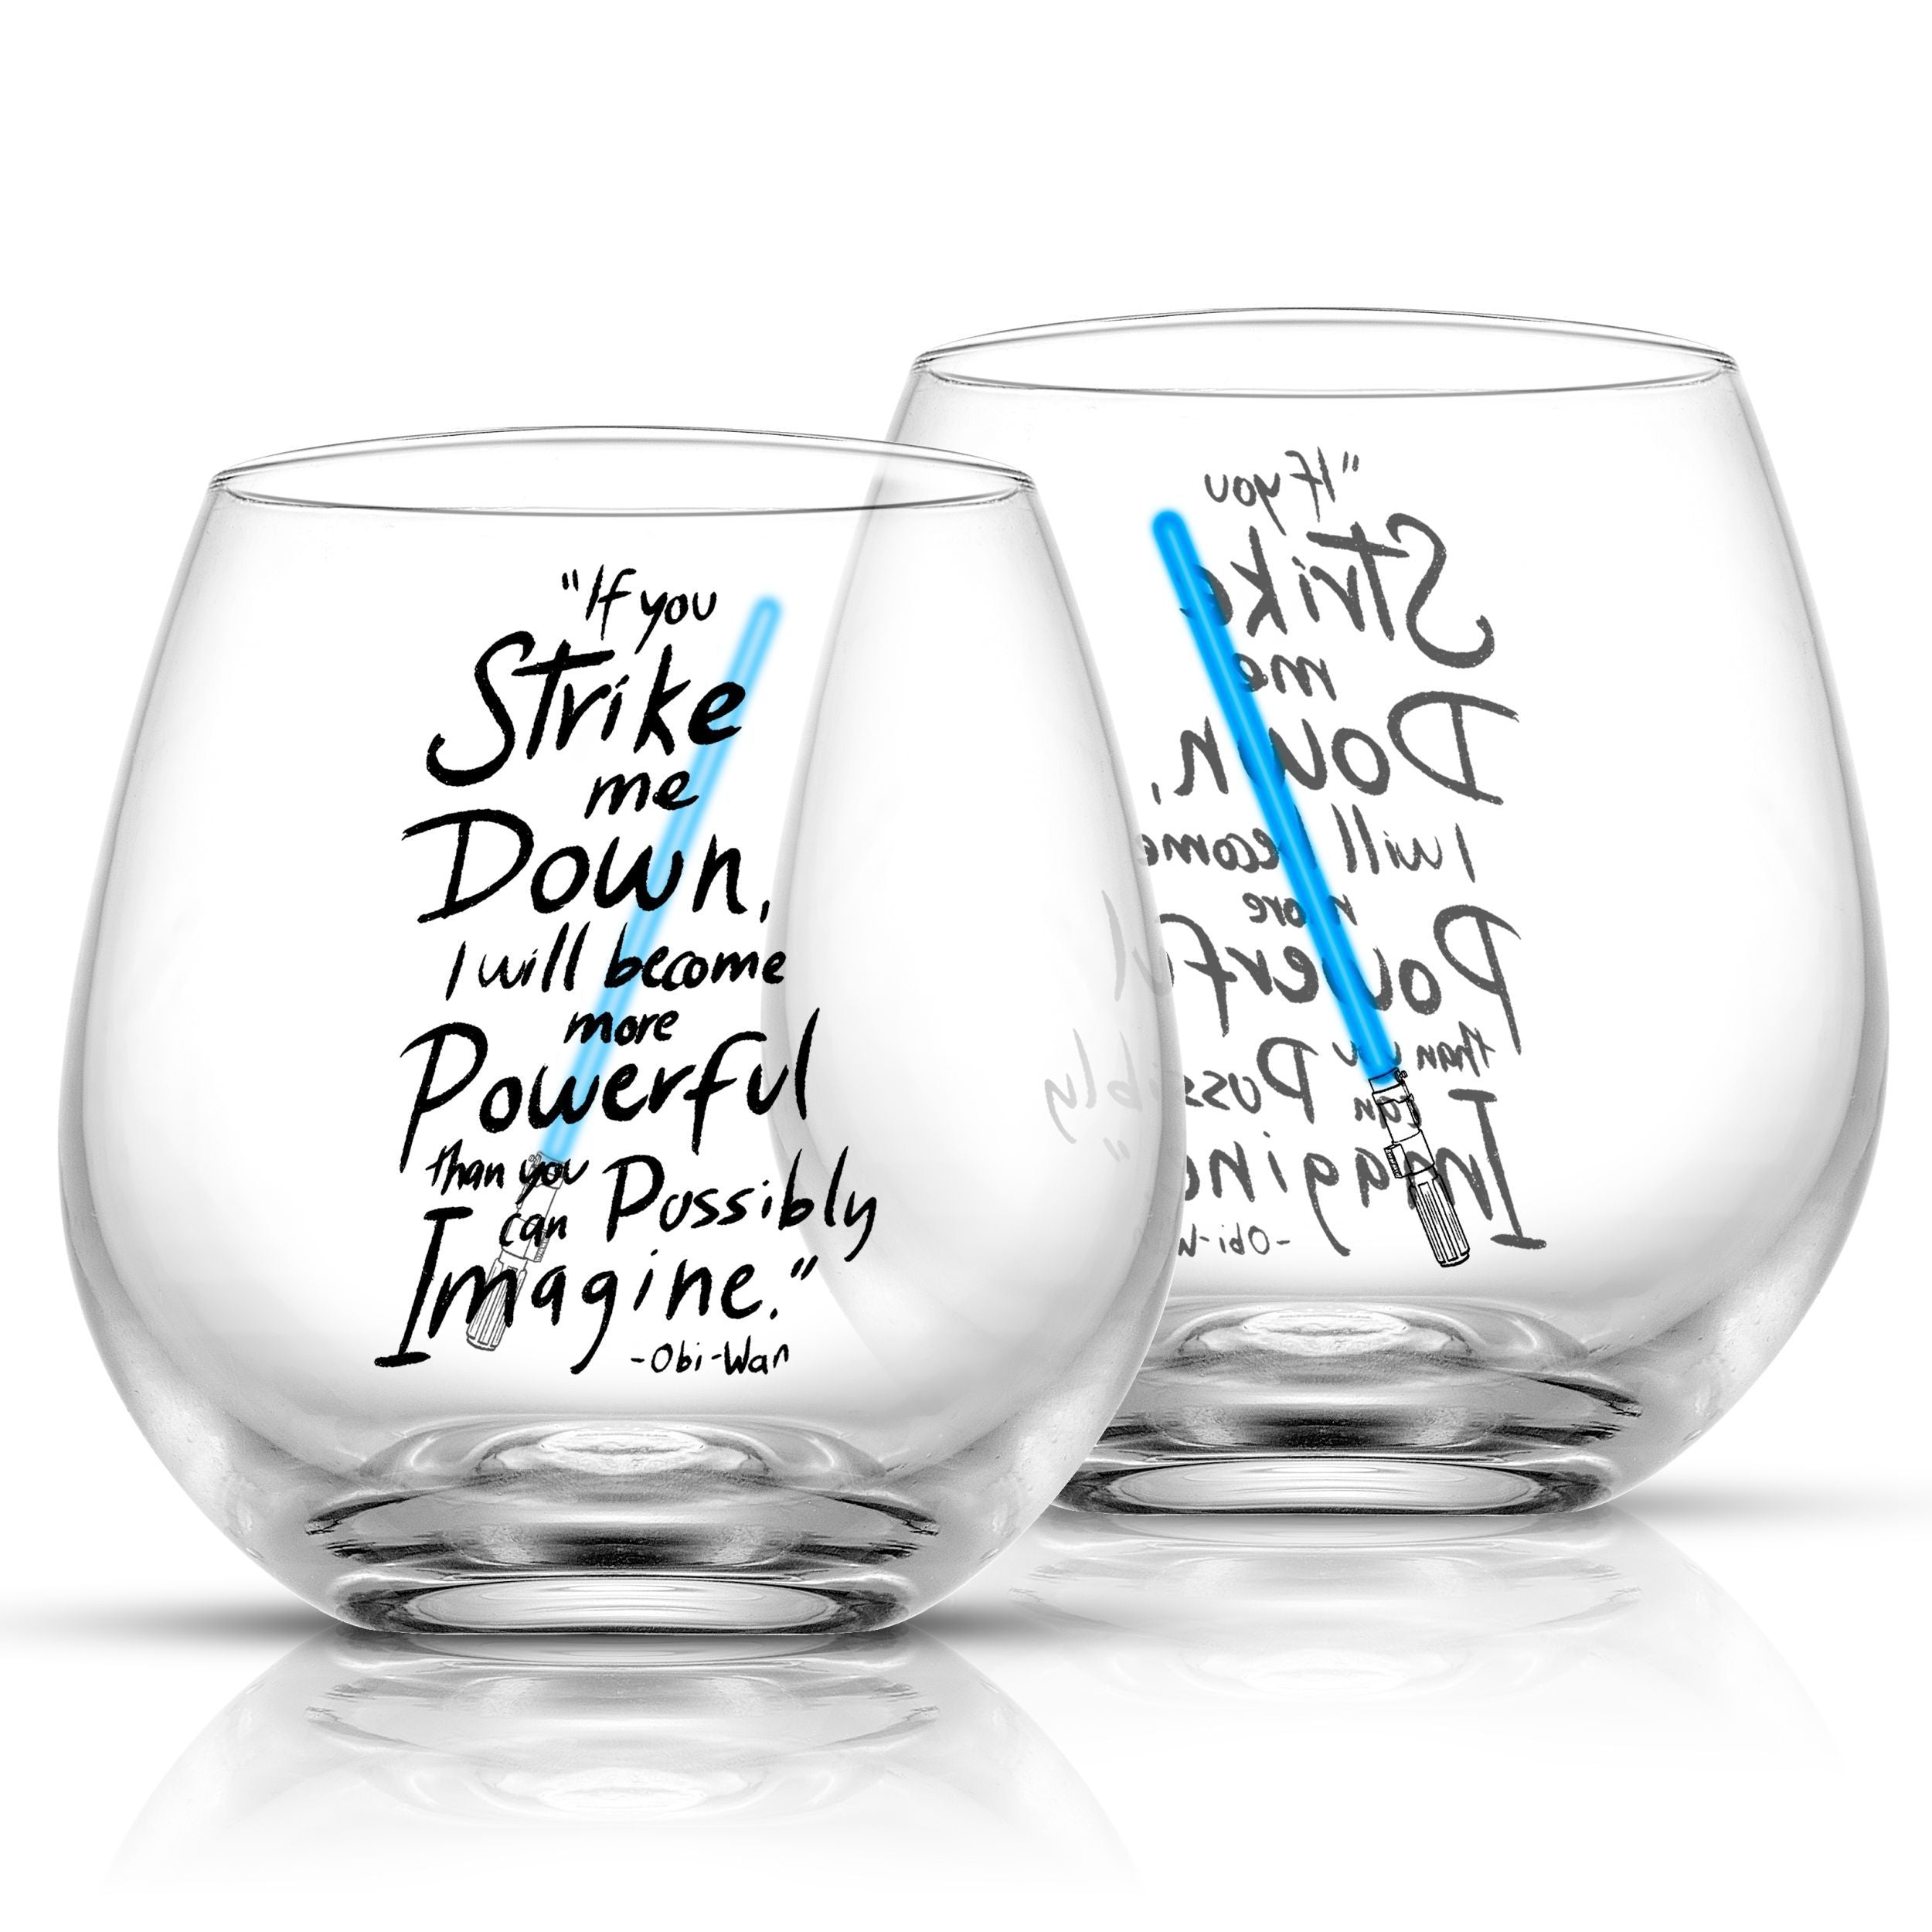 JoyJolt Striking Sketch Art Star Wars Pint Glasses - Set of 4  Pint Glass Capacity Traditional Drinking Glasses. Oversized Darth Vader  C-3PO Stormtrooper Princess Leia Drinking Glasses Set: Beer Glasses